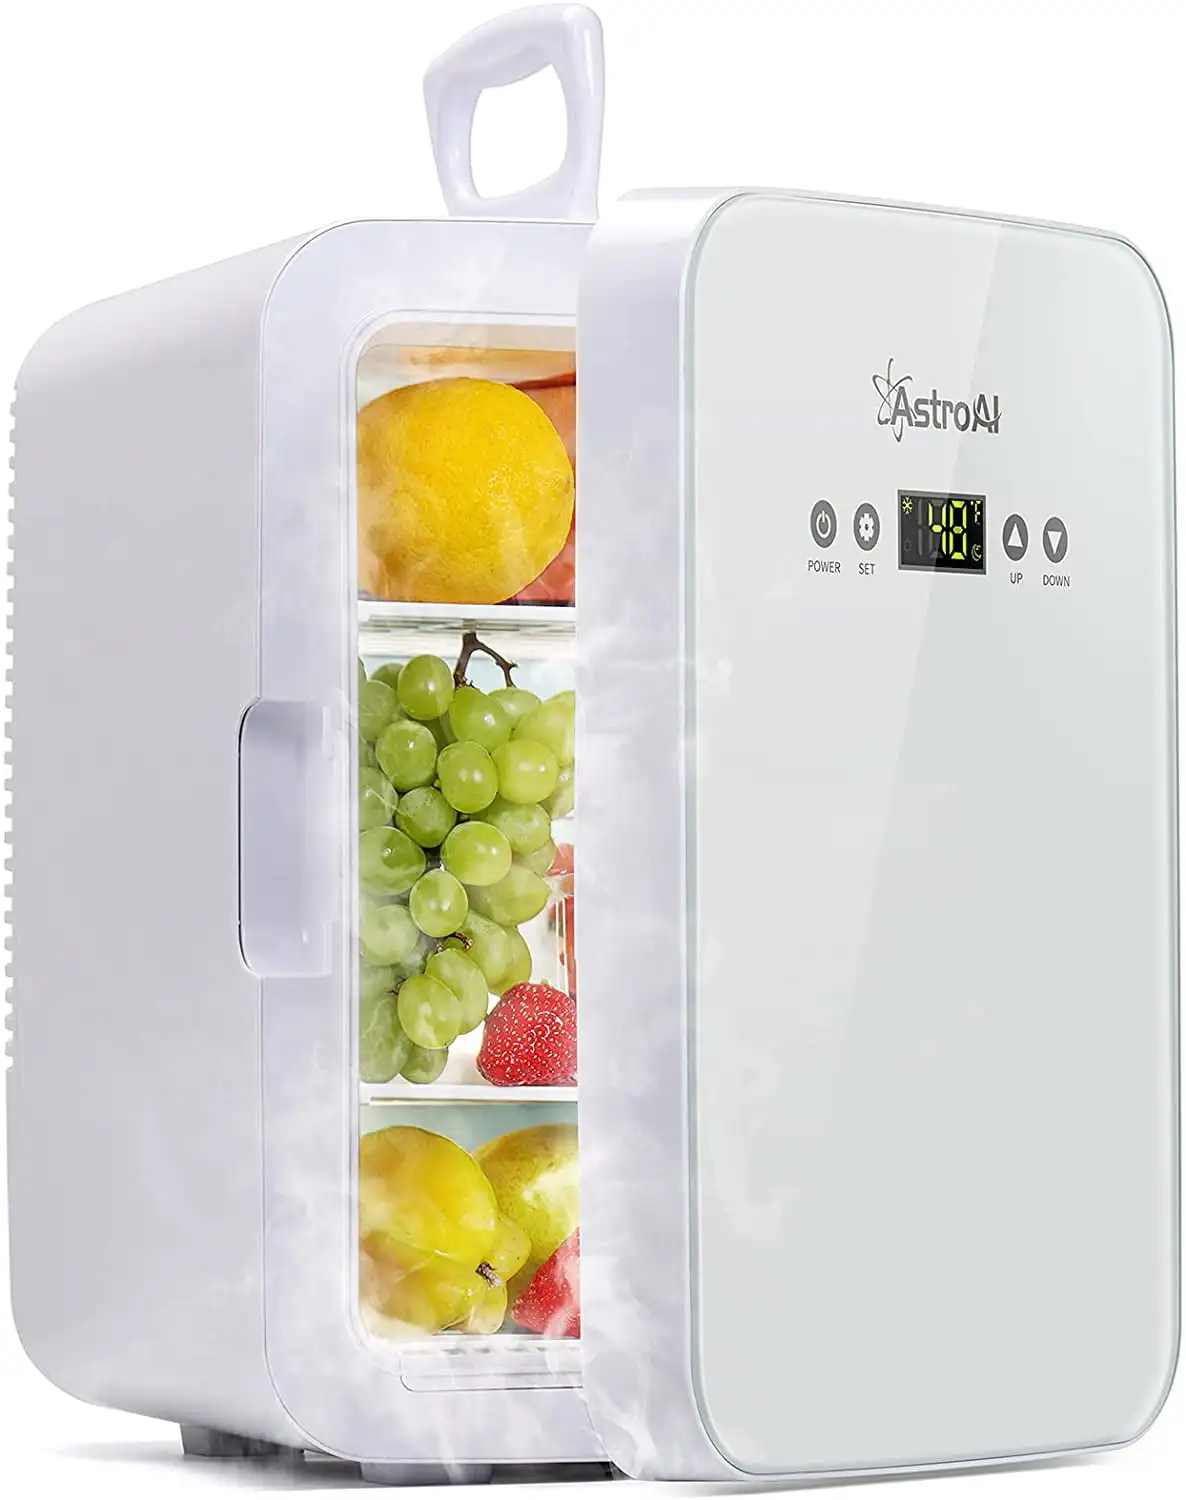 Portable Refrigerator Mini Fridge, 10L/15 Can Digital Display for Skincare, Cosmetics, Foods, Medications, AC/ DC Portable Coole